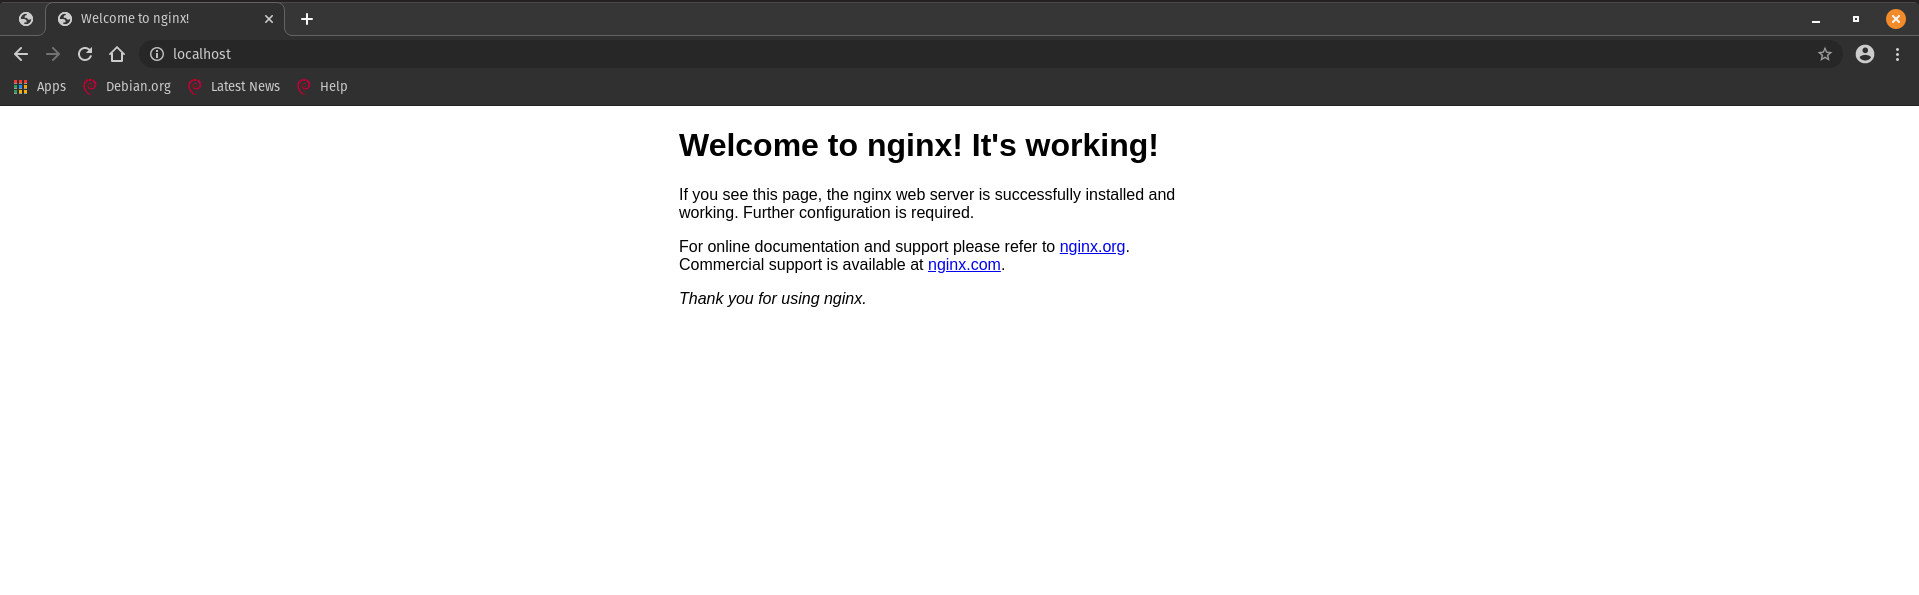 Nginx funcionando no navegador